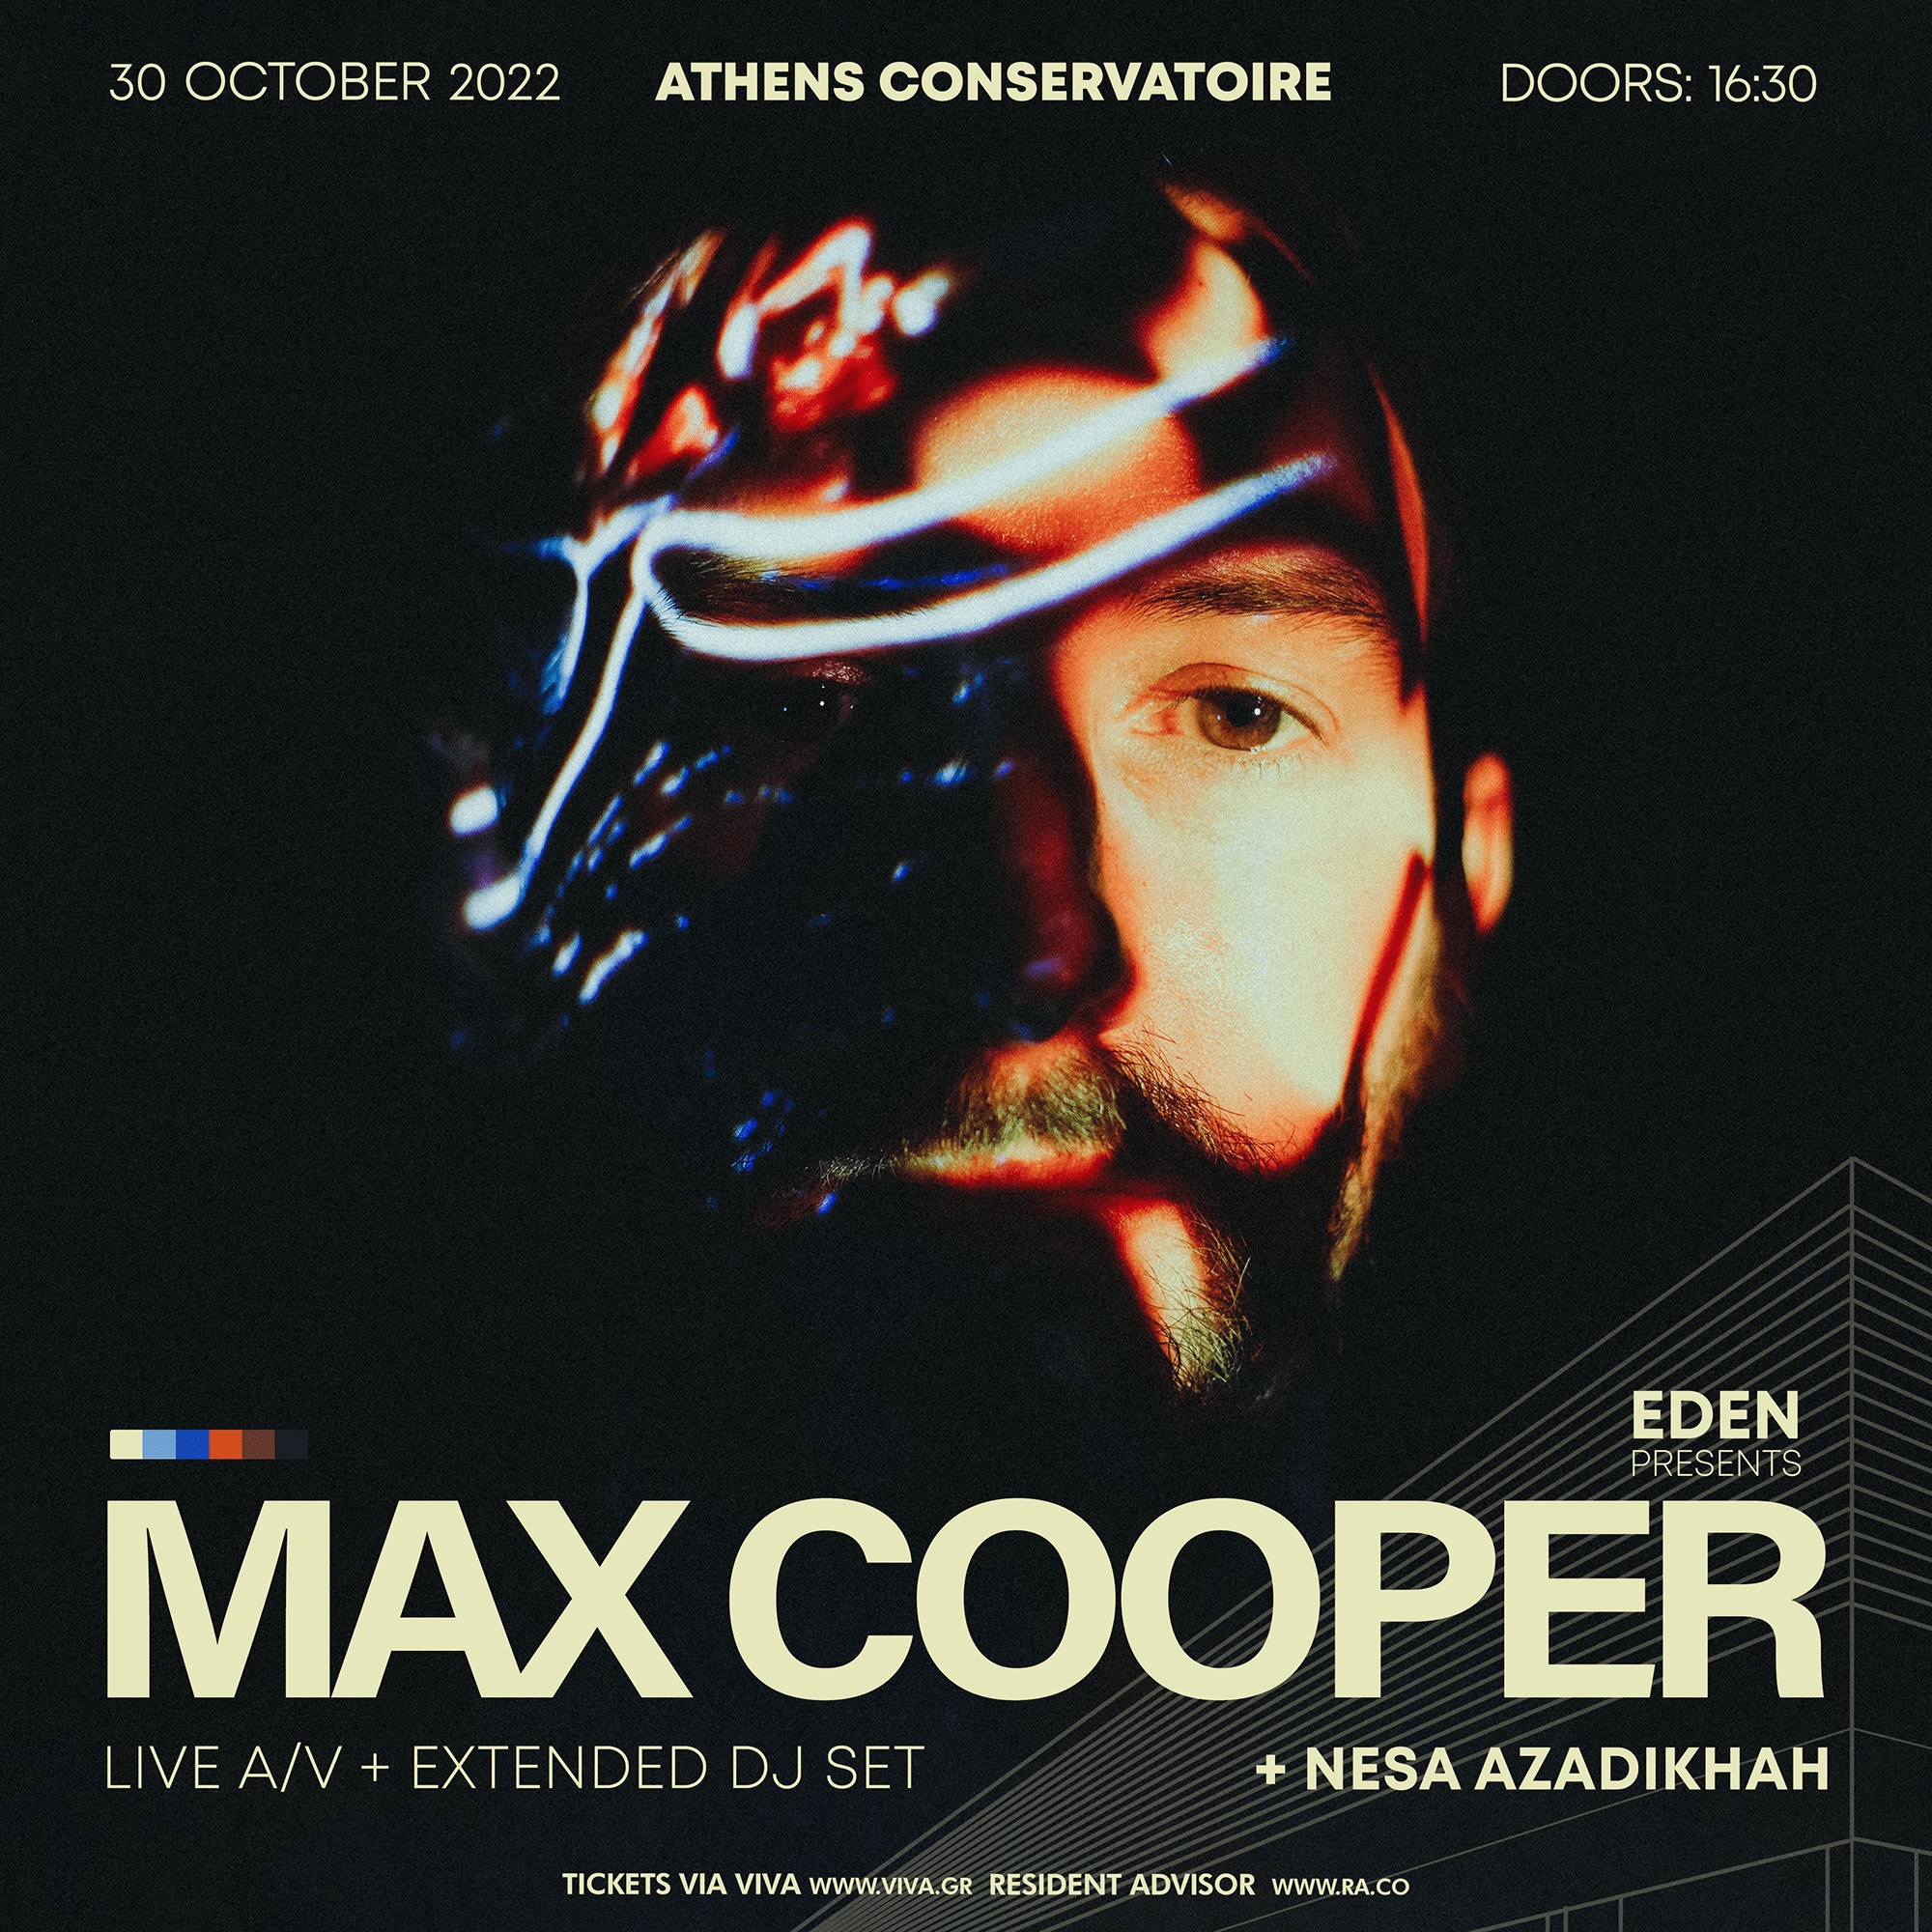 EDEN hosting Max Cooper & Nesa Azadikhah join forces with ADAF